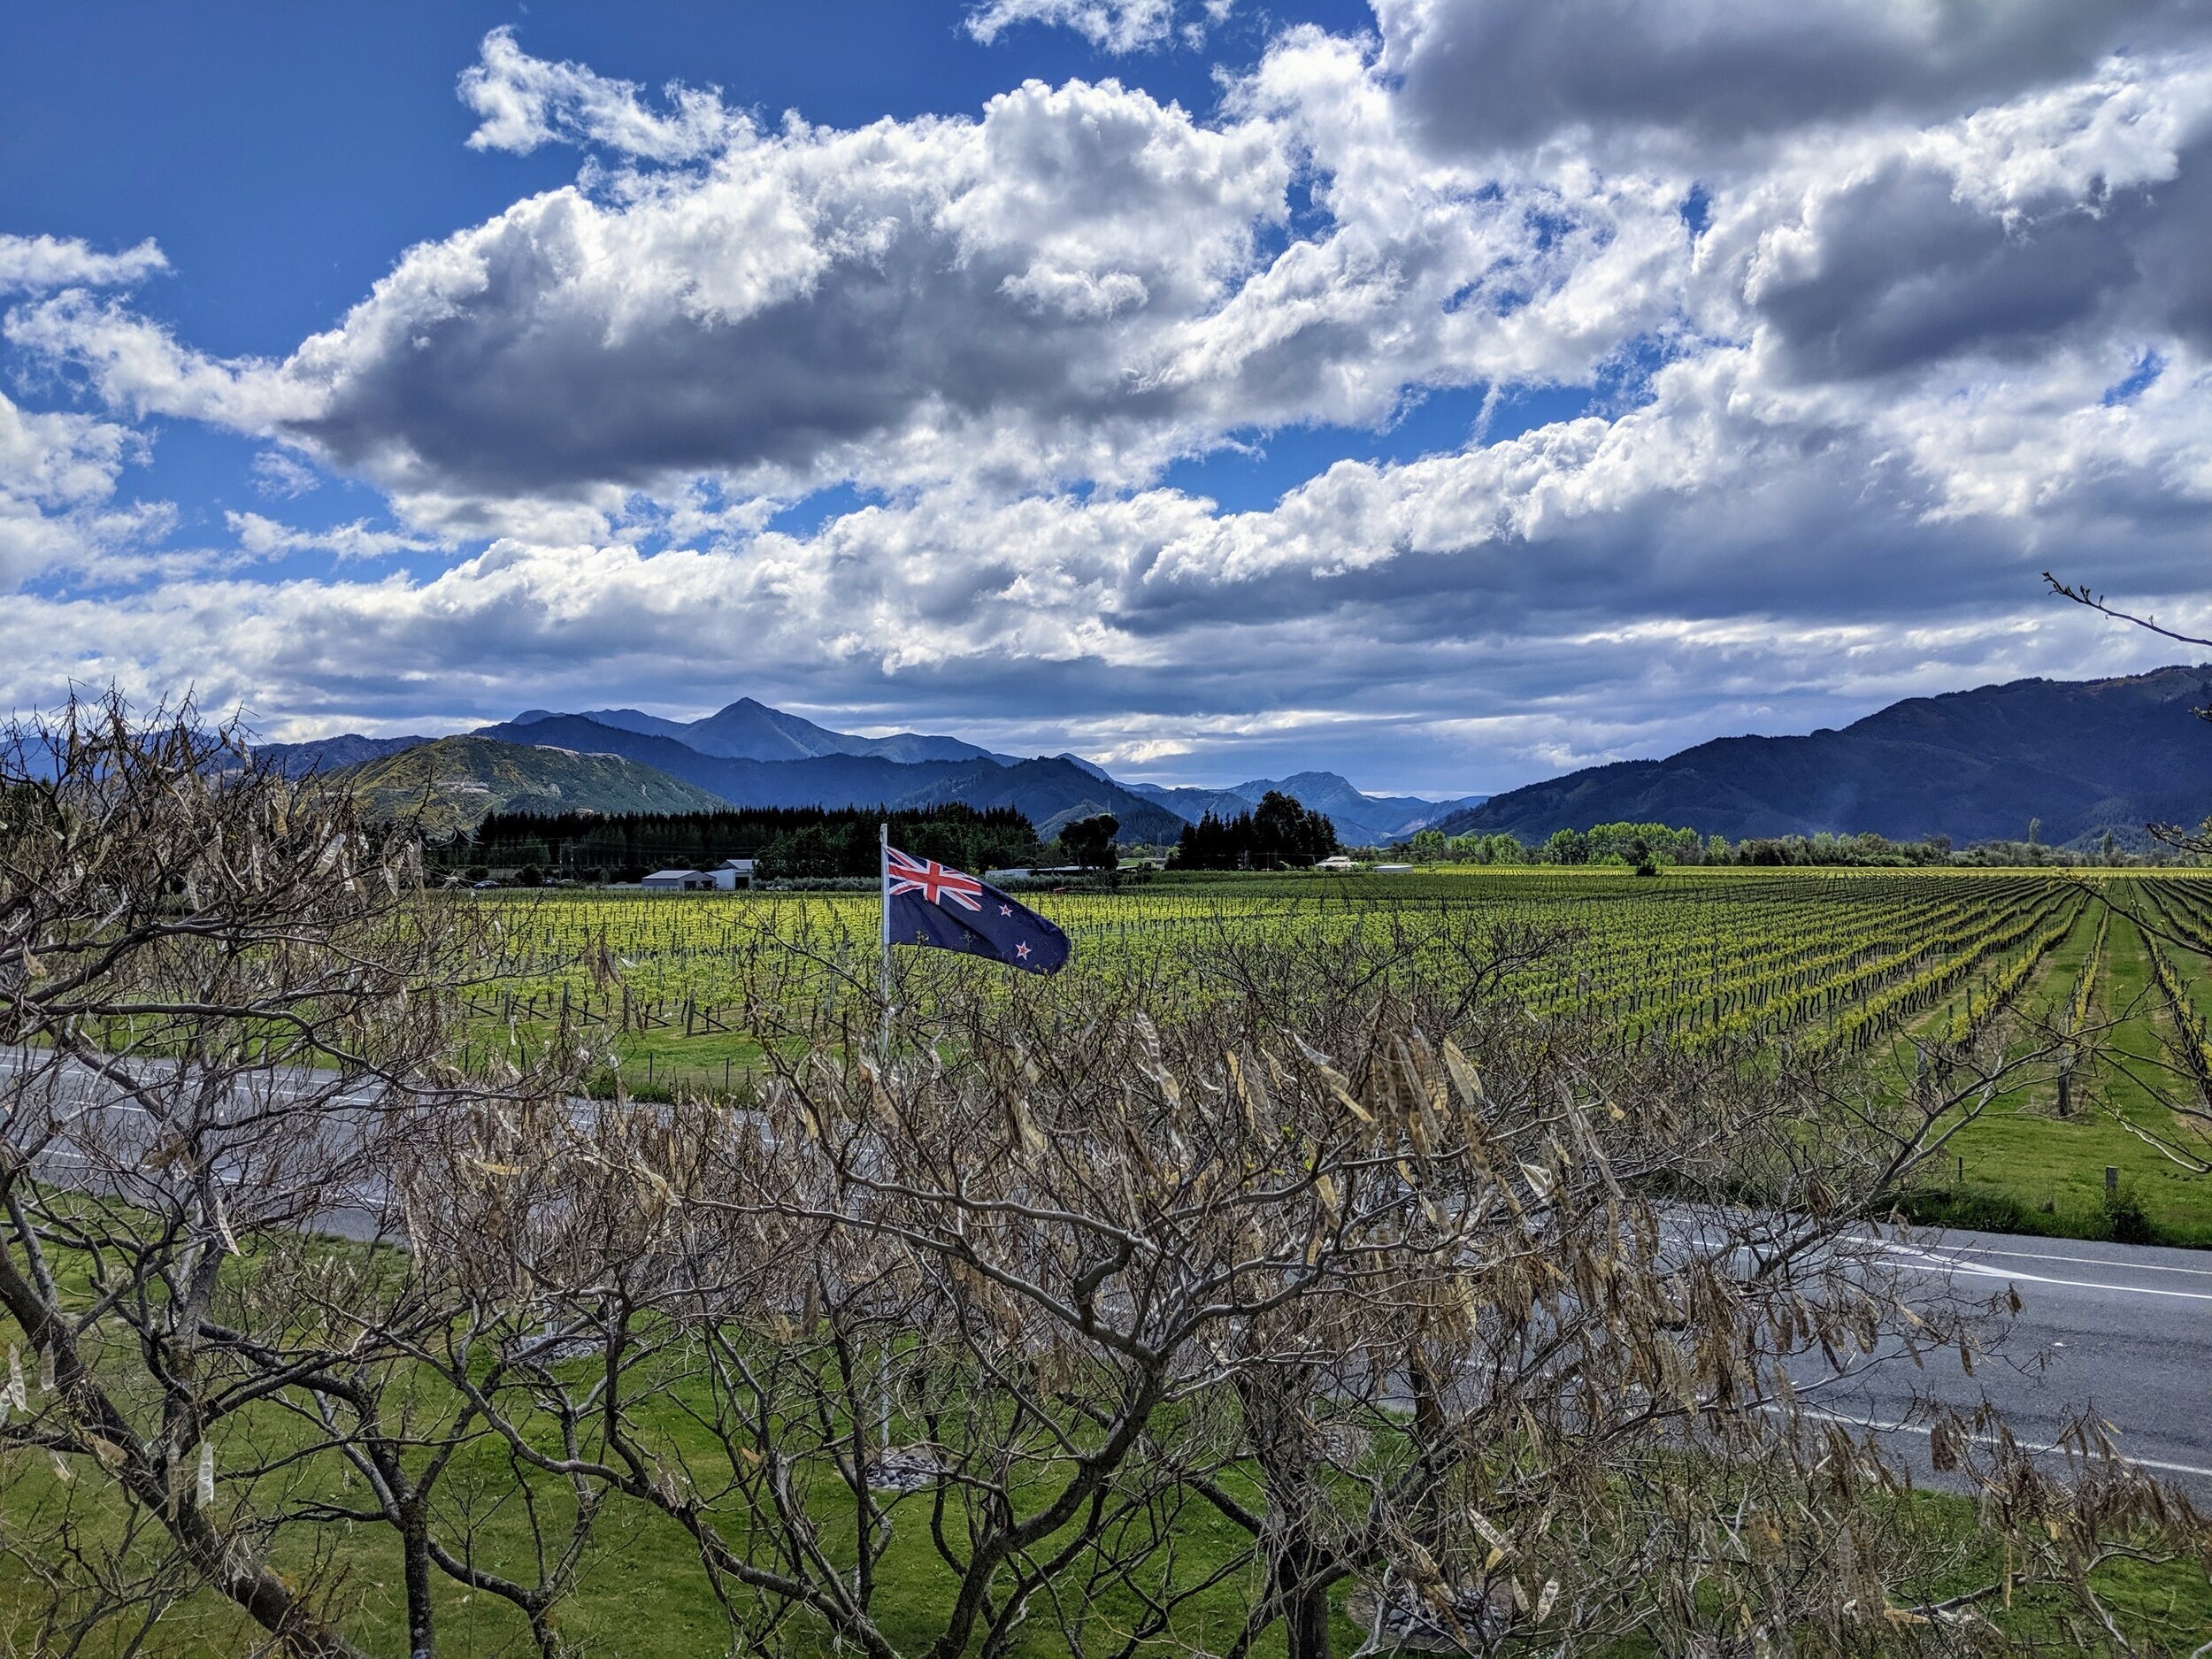  Vineyards in Marlborough Wine Country with Richmond Range in the background. 